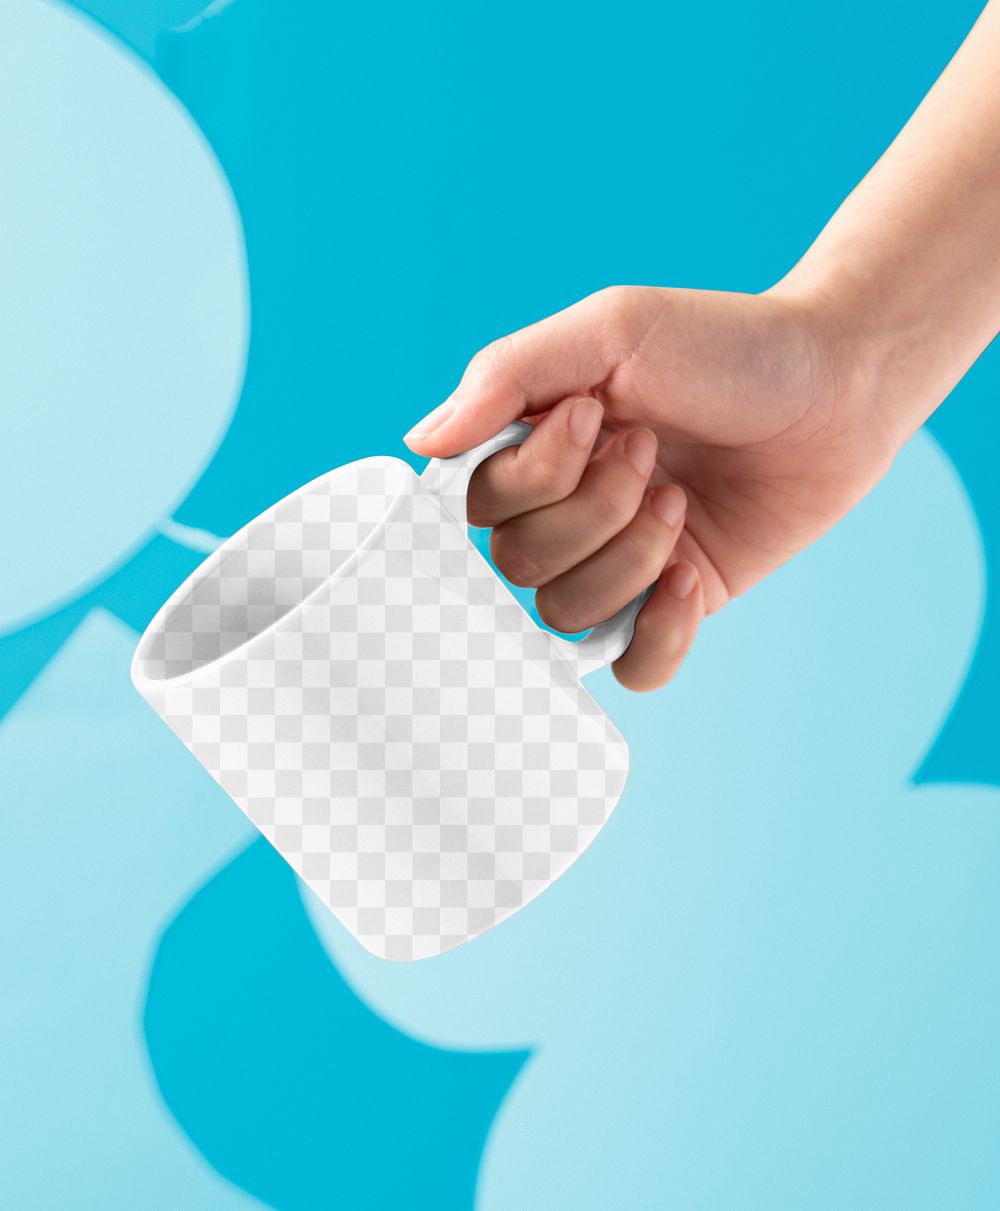 Coffee mug mockup png, transparent design